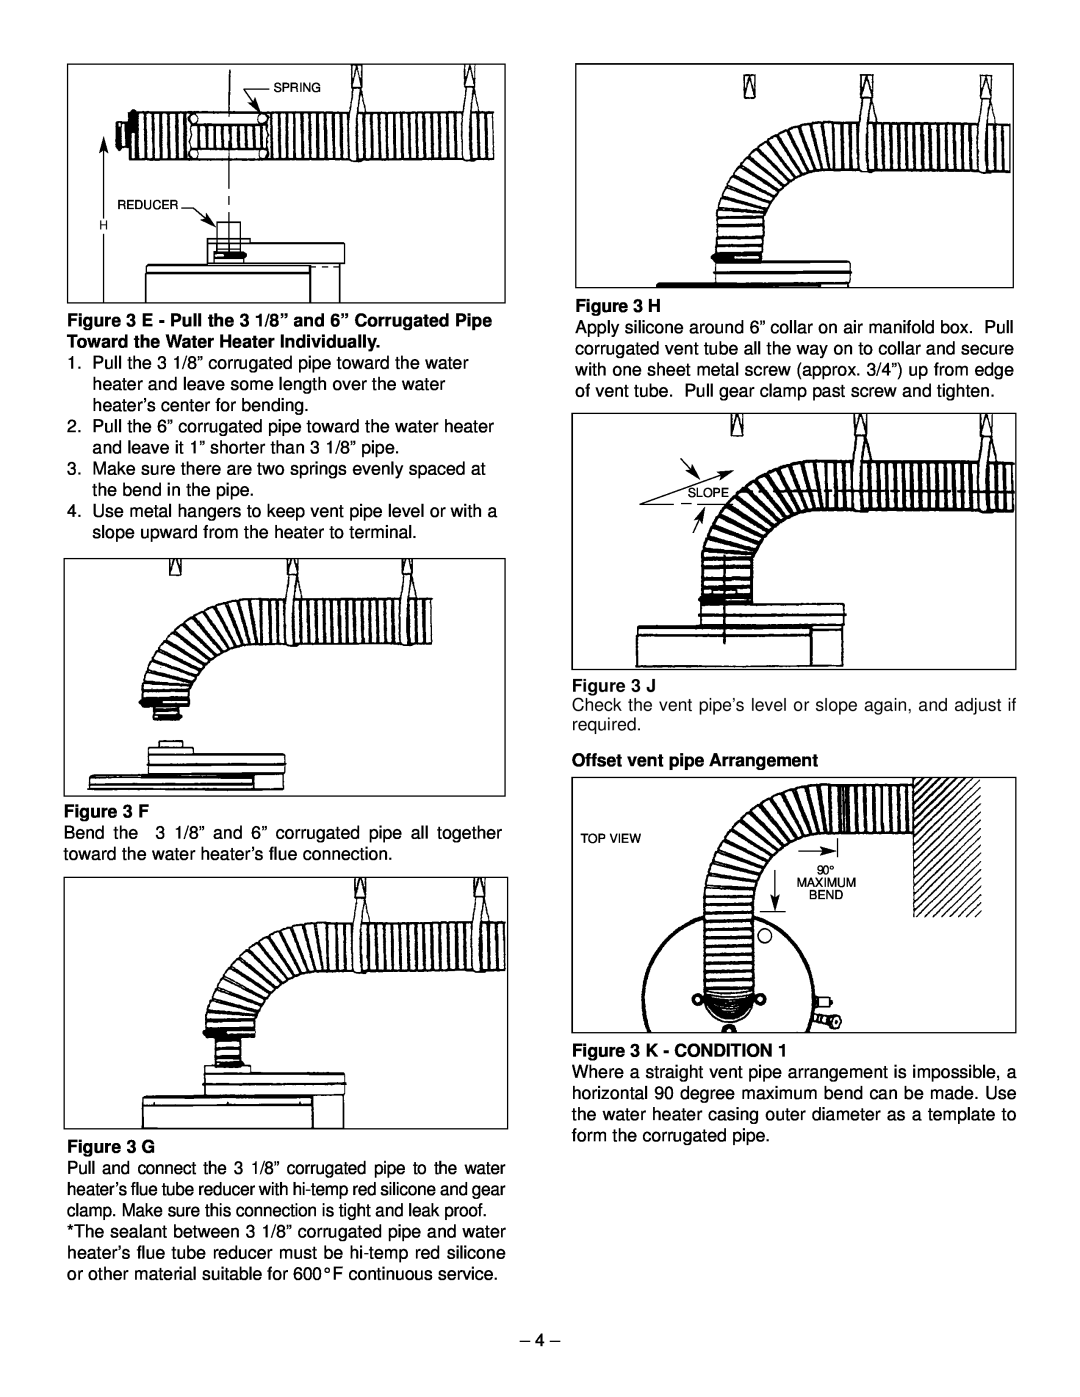 GSW PART NO.70999 REV.G (03-12) operating instructions F, H, J, Offset vent pipe Arrangement, K - Condition 